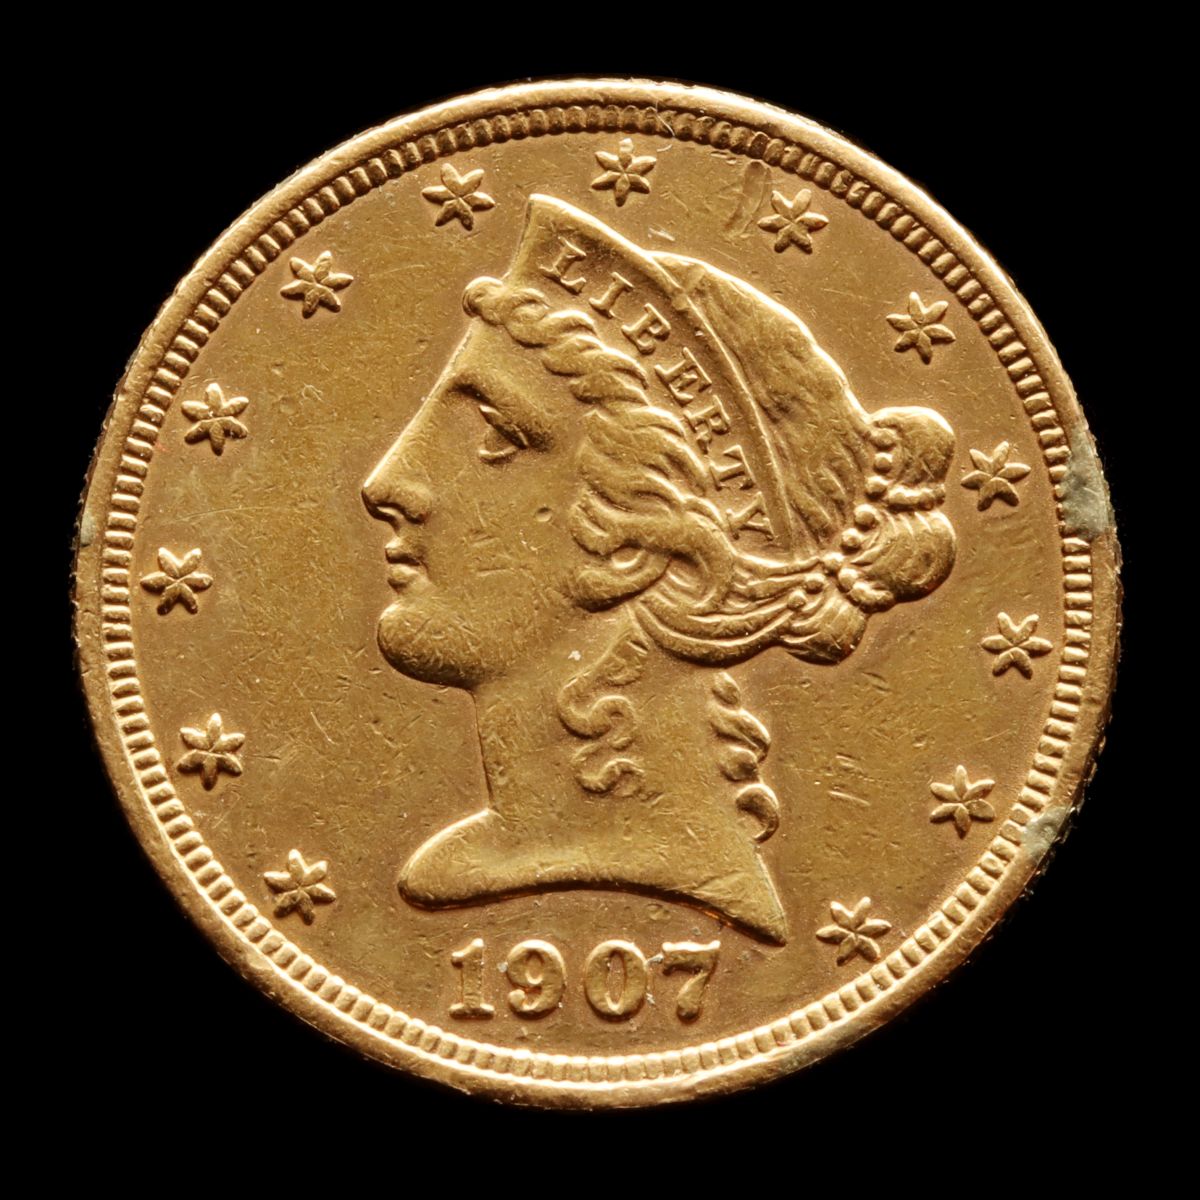 A 1907-D LIBERTY HEAD $5 US GOLD COIN